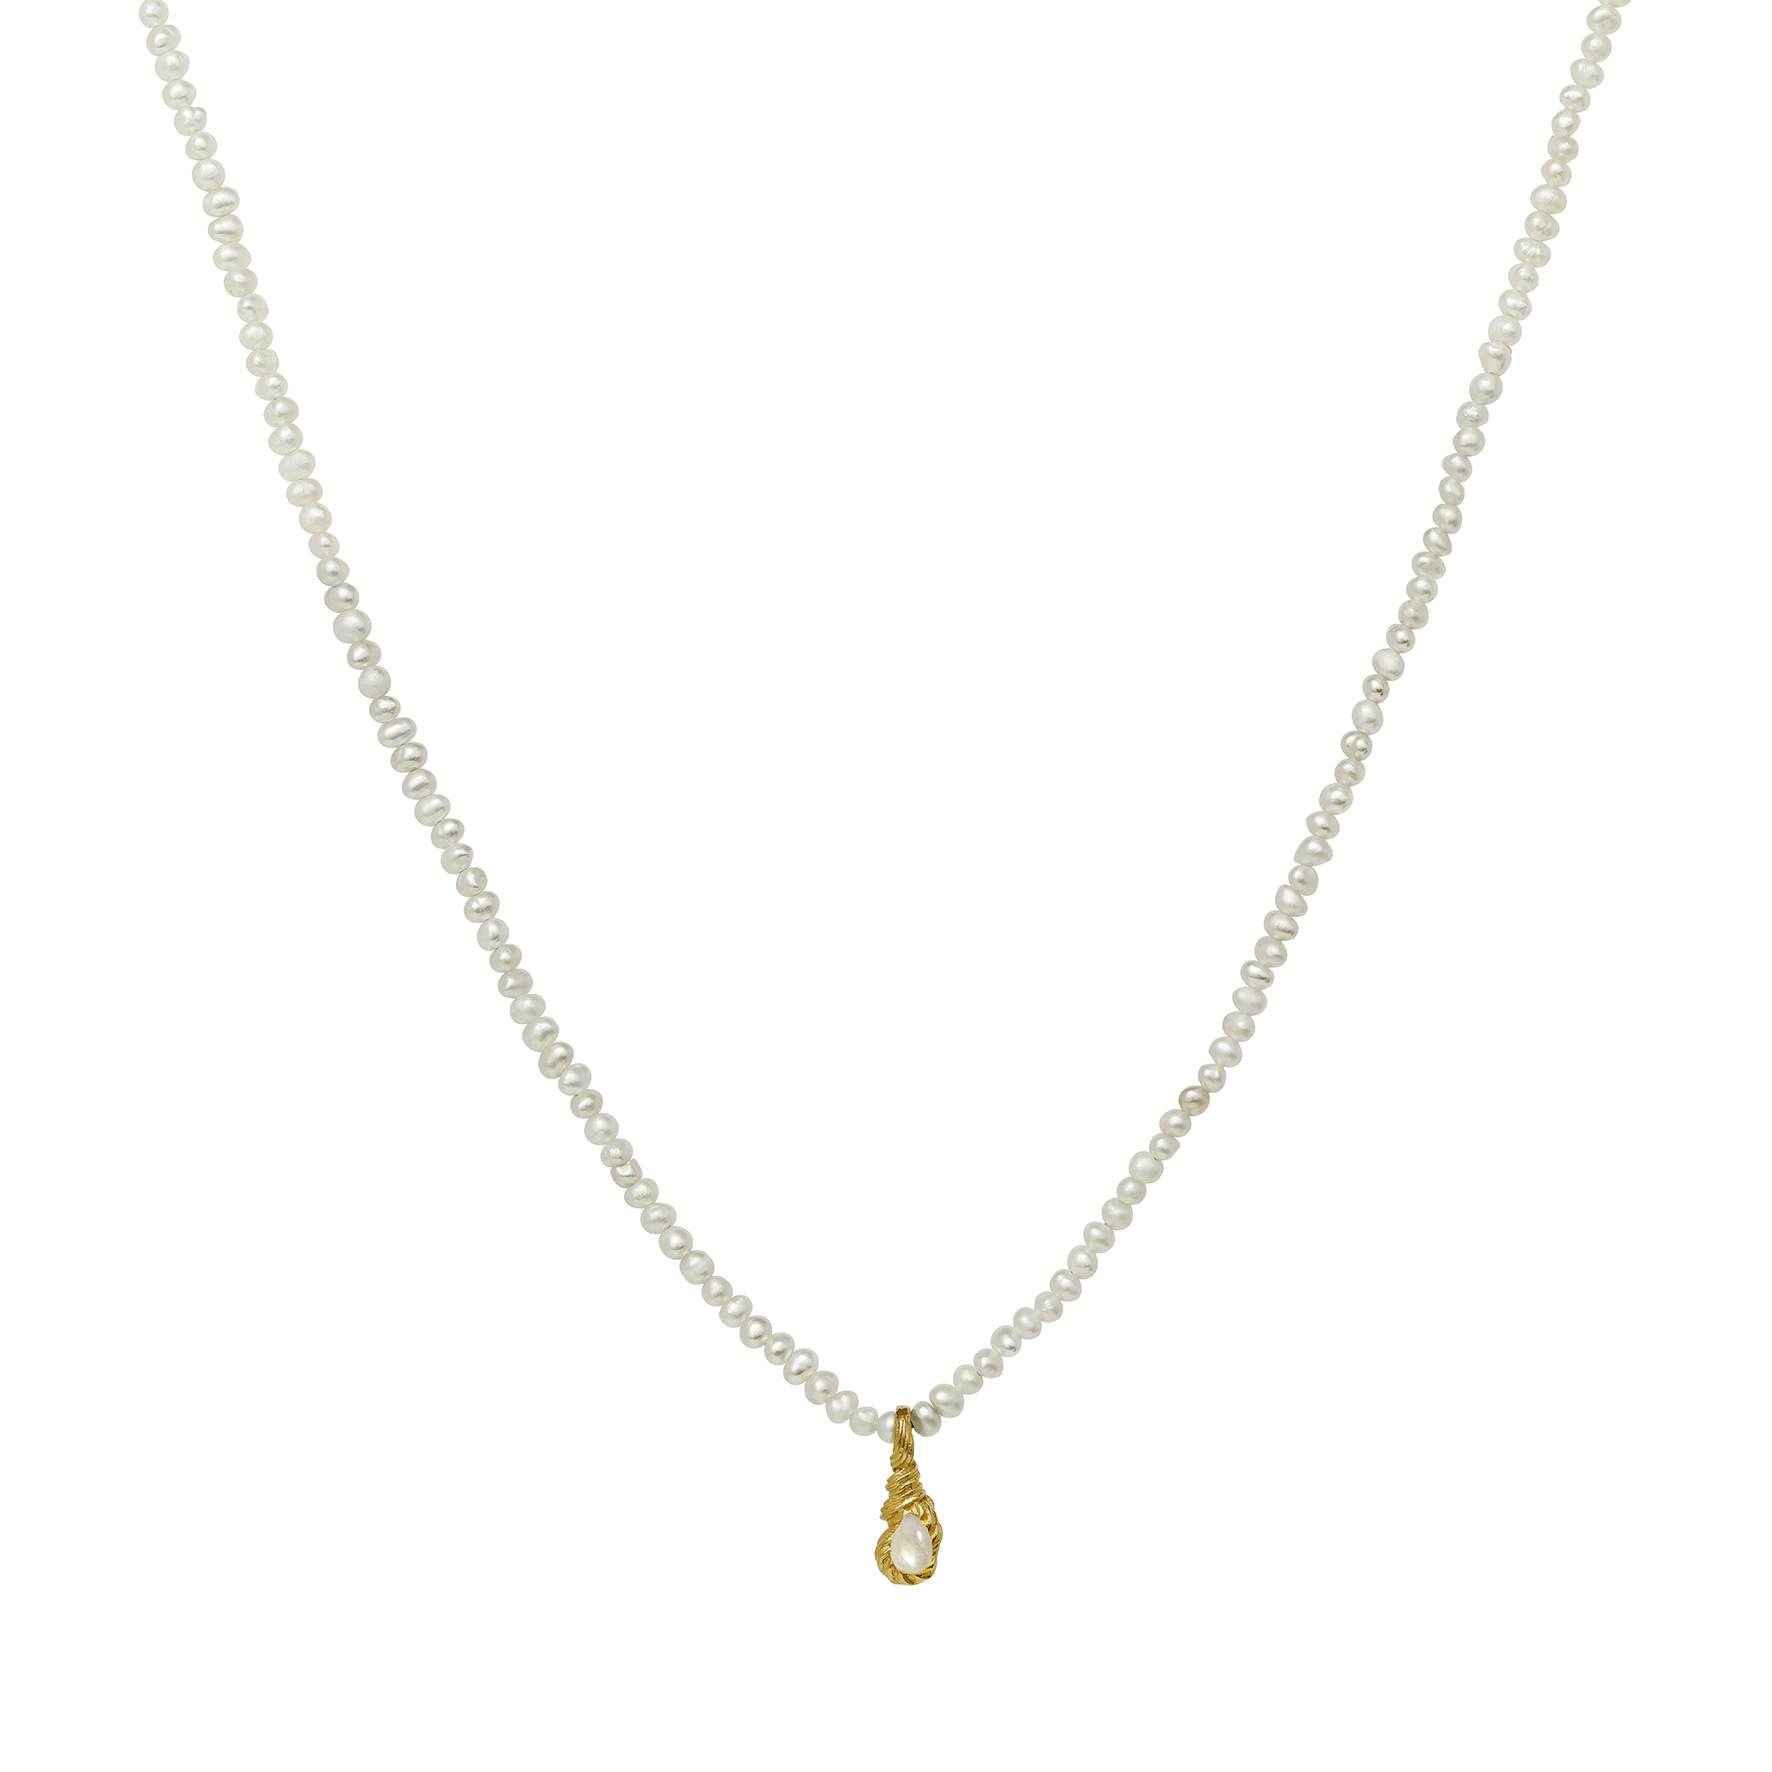 Aqua Necklace von Maanesten in Vergoldet-Silber Sterling 925|Freshwater Pearl